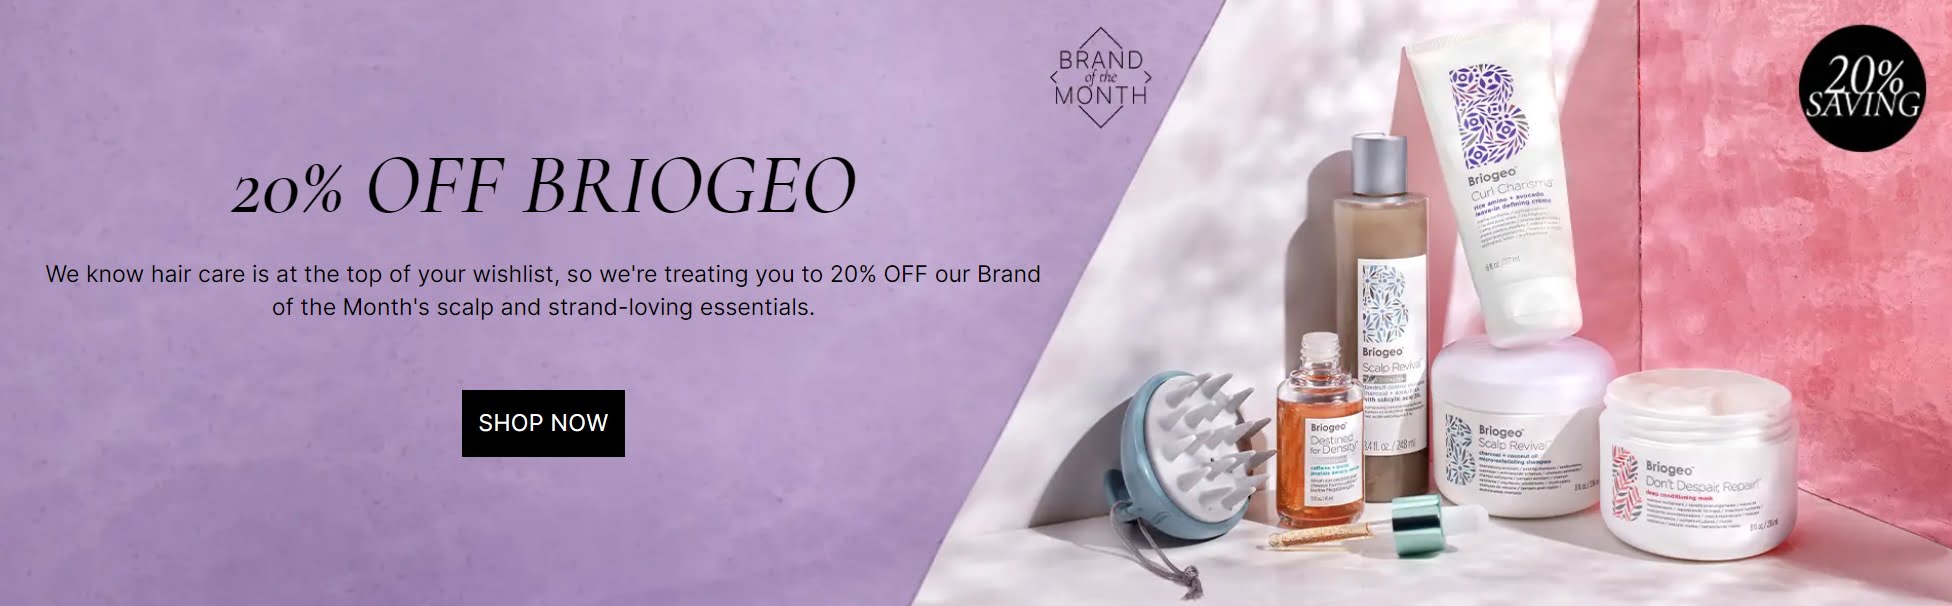 20% off Briogeo at Cult Beauty + free shipping